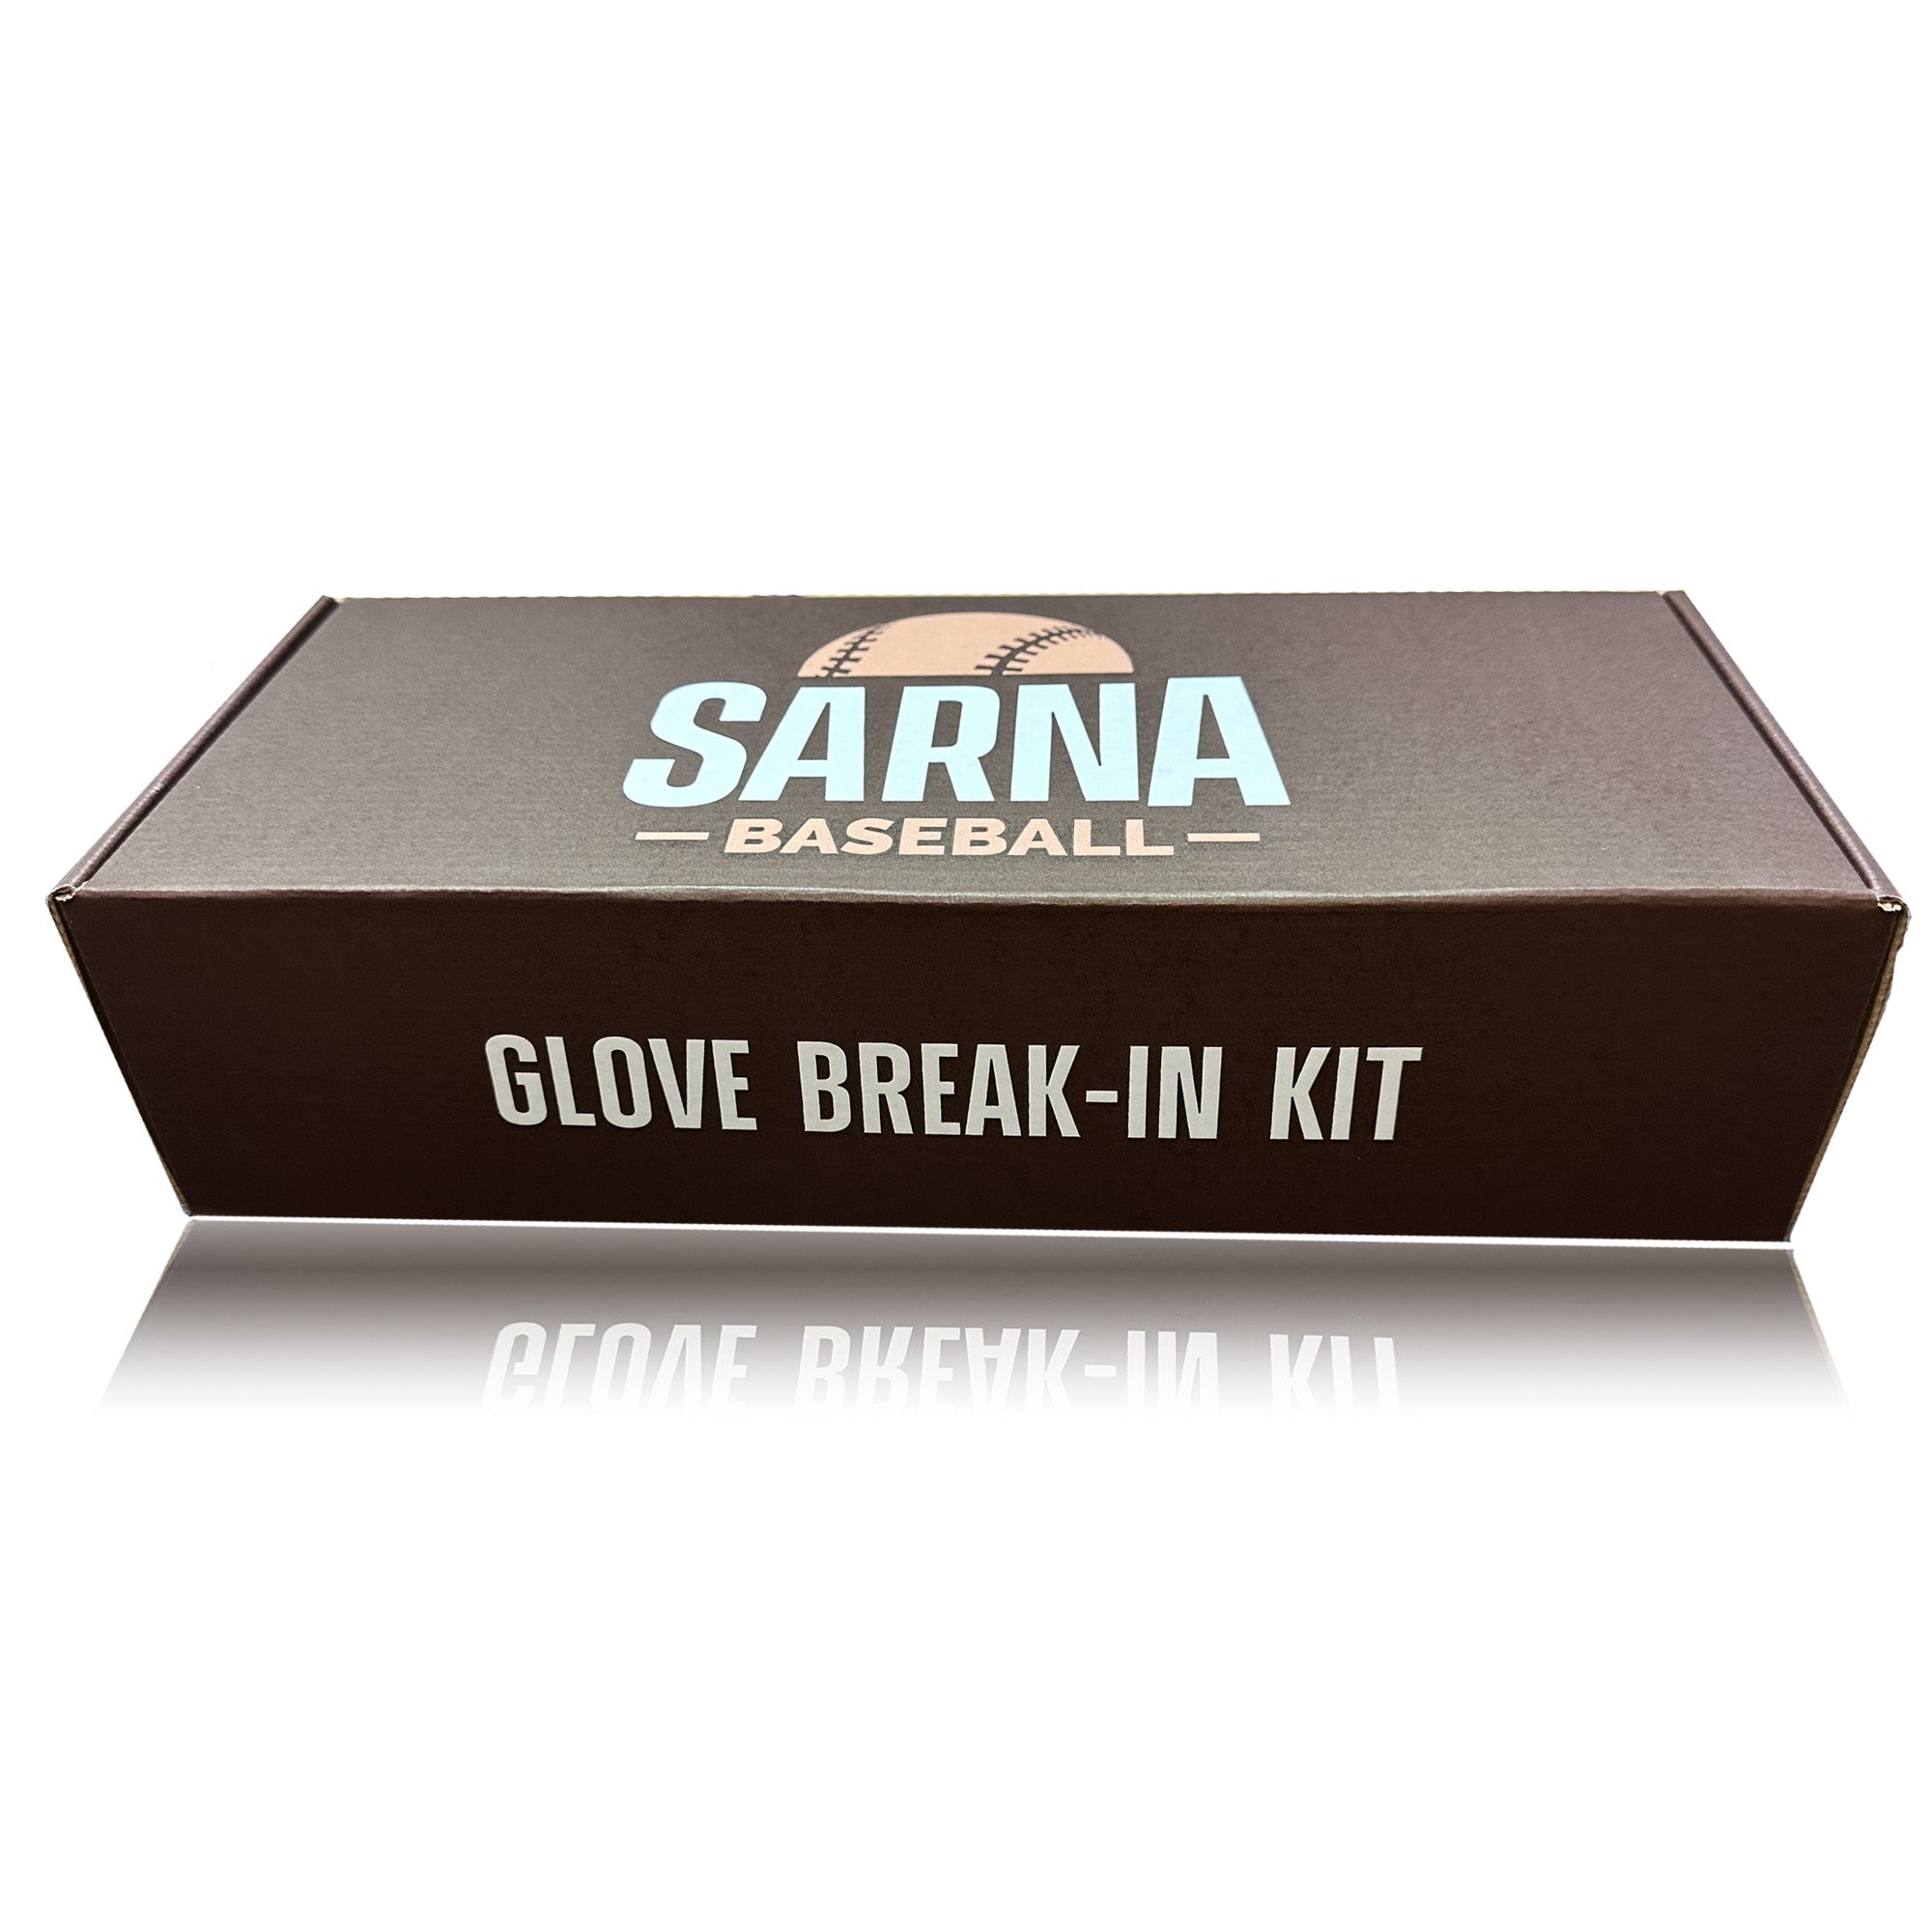 sarna baseball glove break-in kit mallet and conditioner